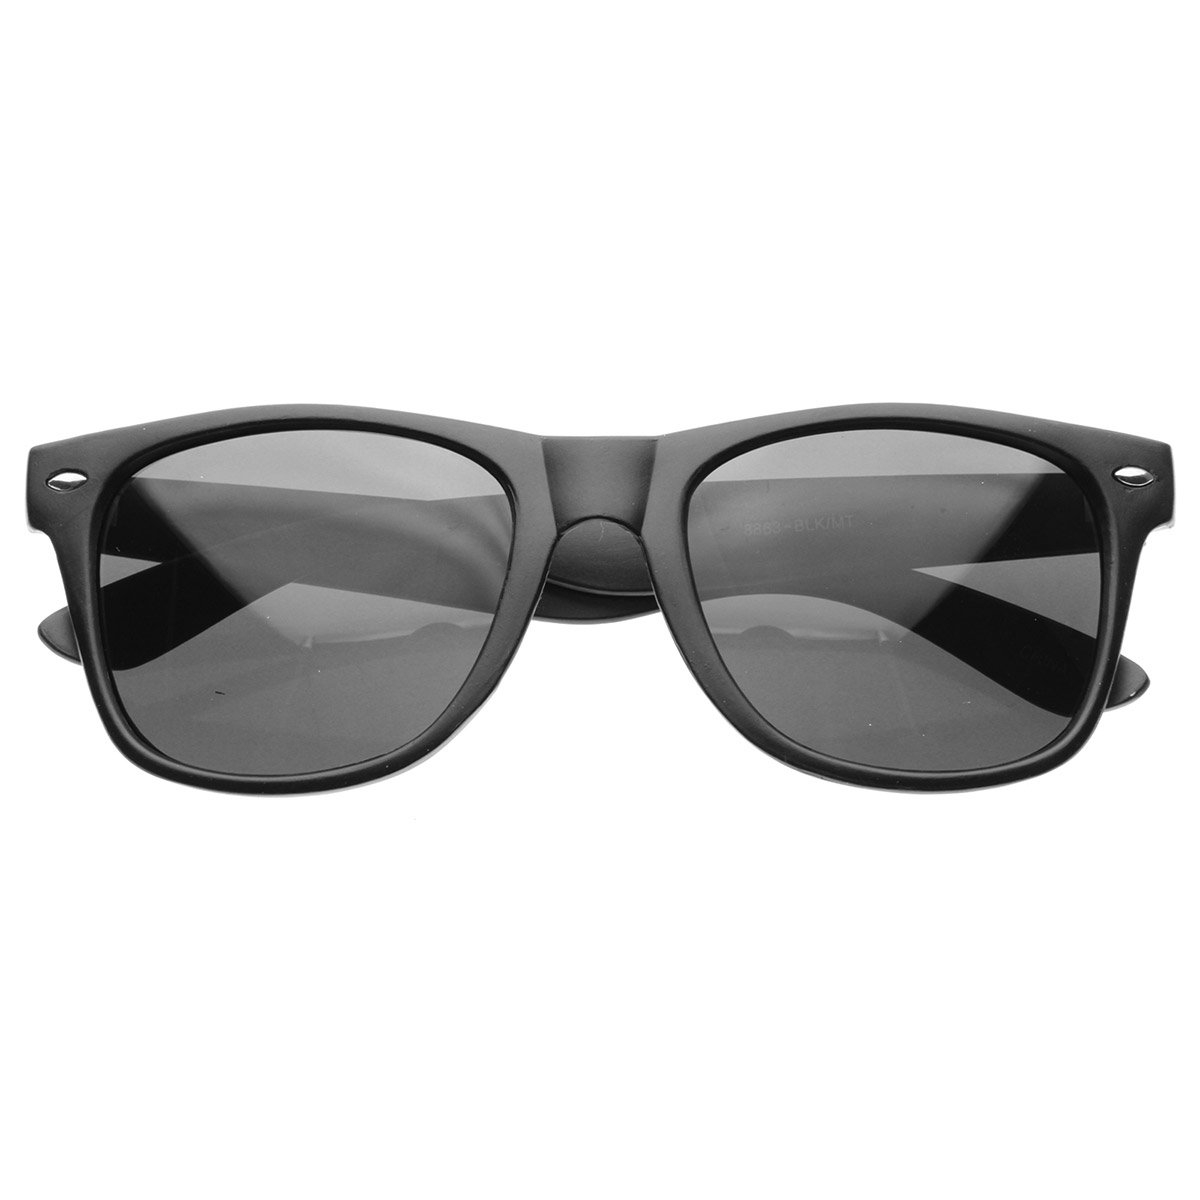 Super Hipster Trendy Urban Matte Black Soft Finish Horn Rimmed Sunglasses - 2-Pack